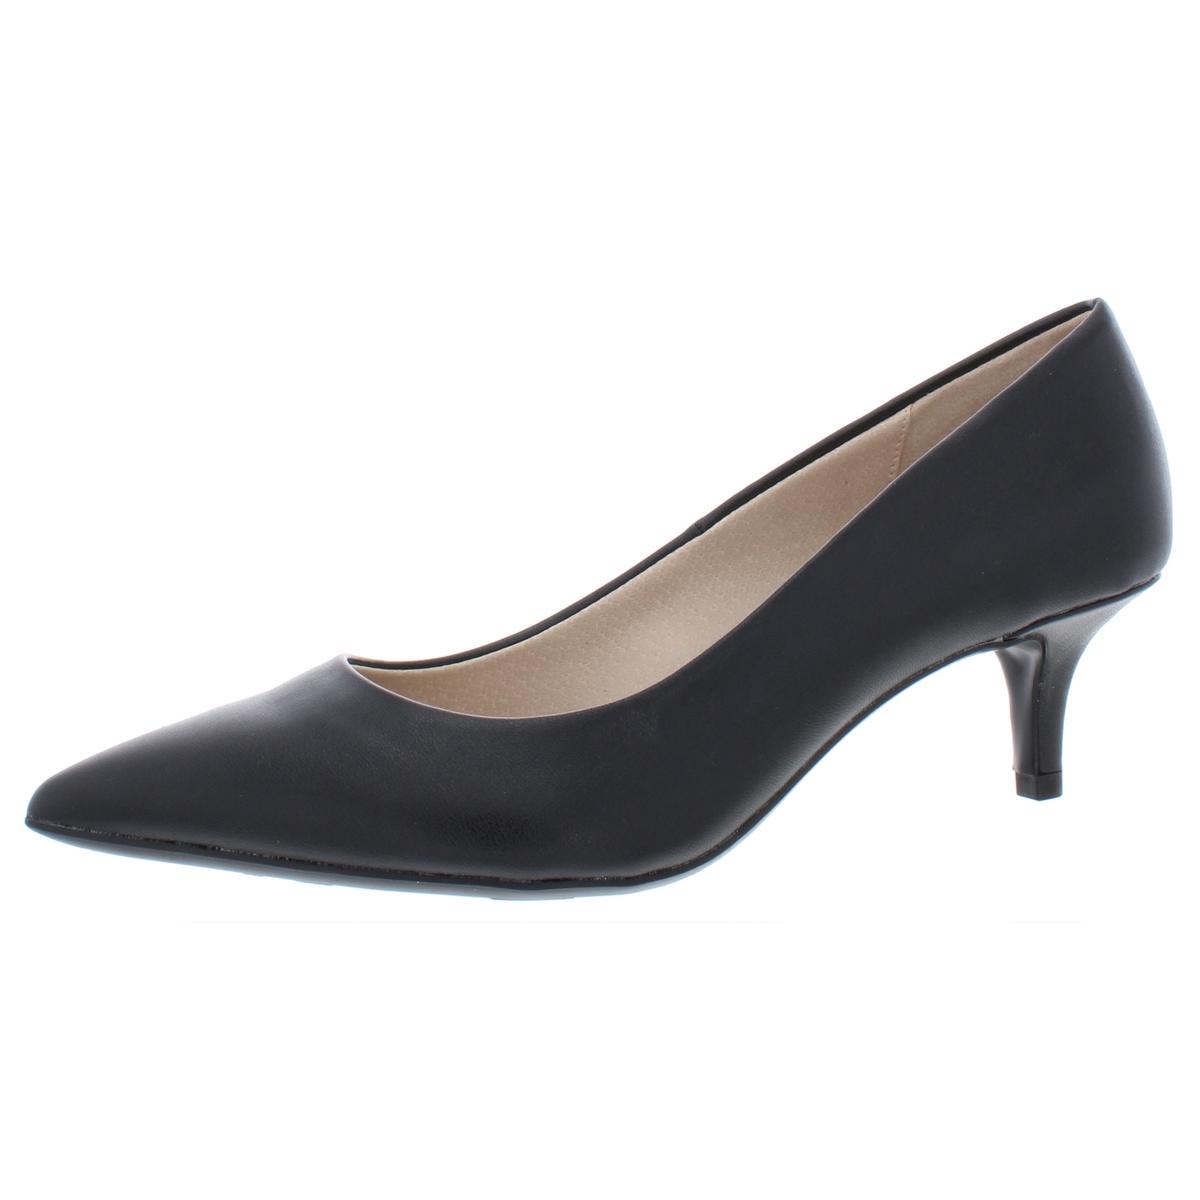 pretty black heels